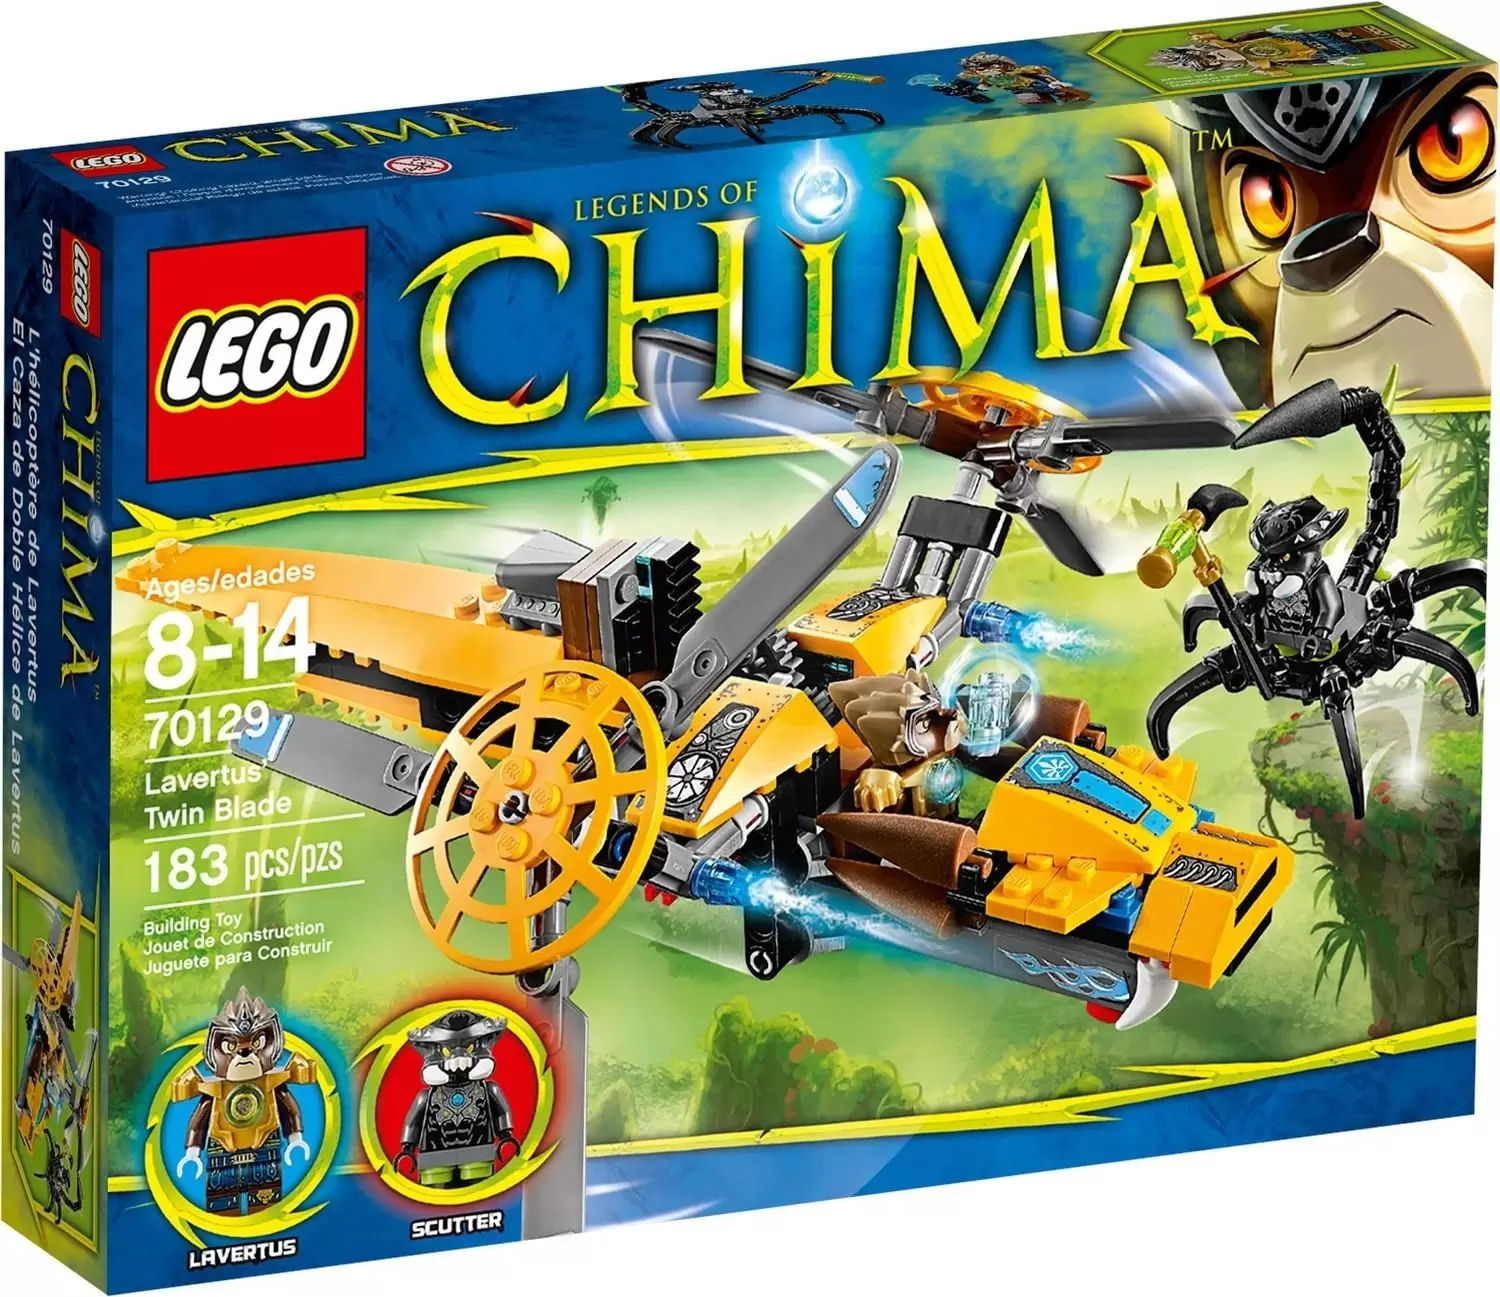 LEGO Legends of Chima - Lavertus\' Twin Blade